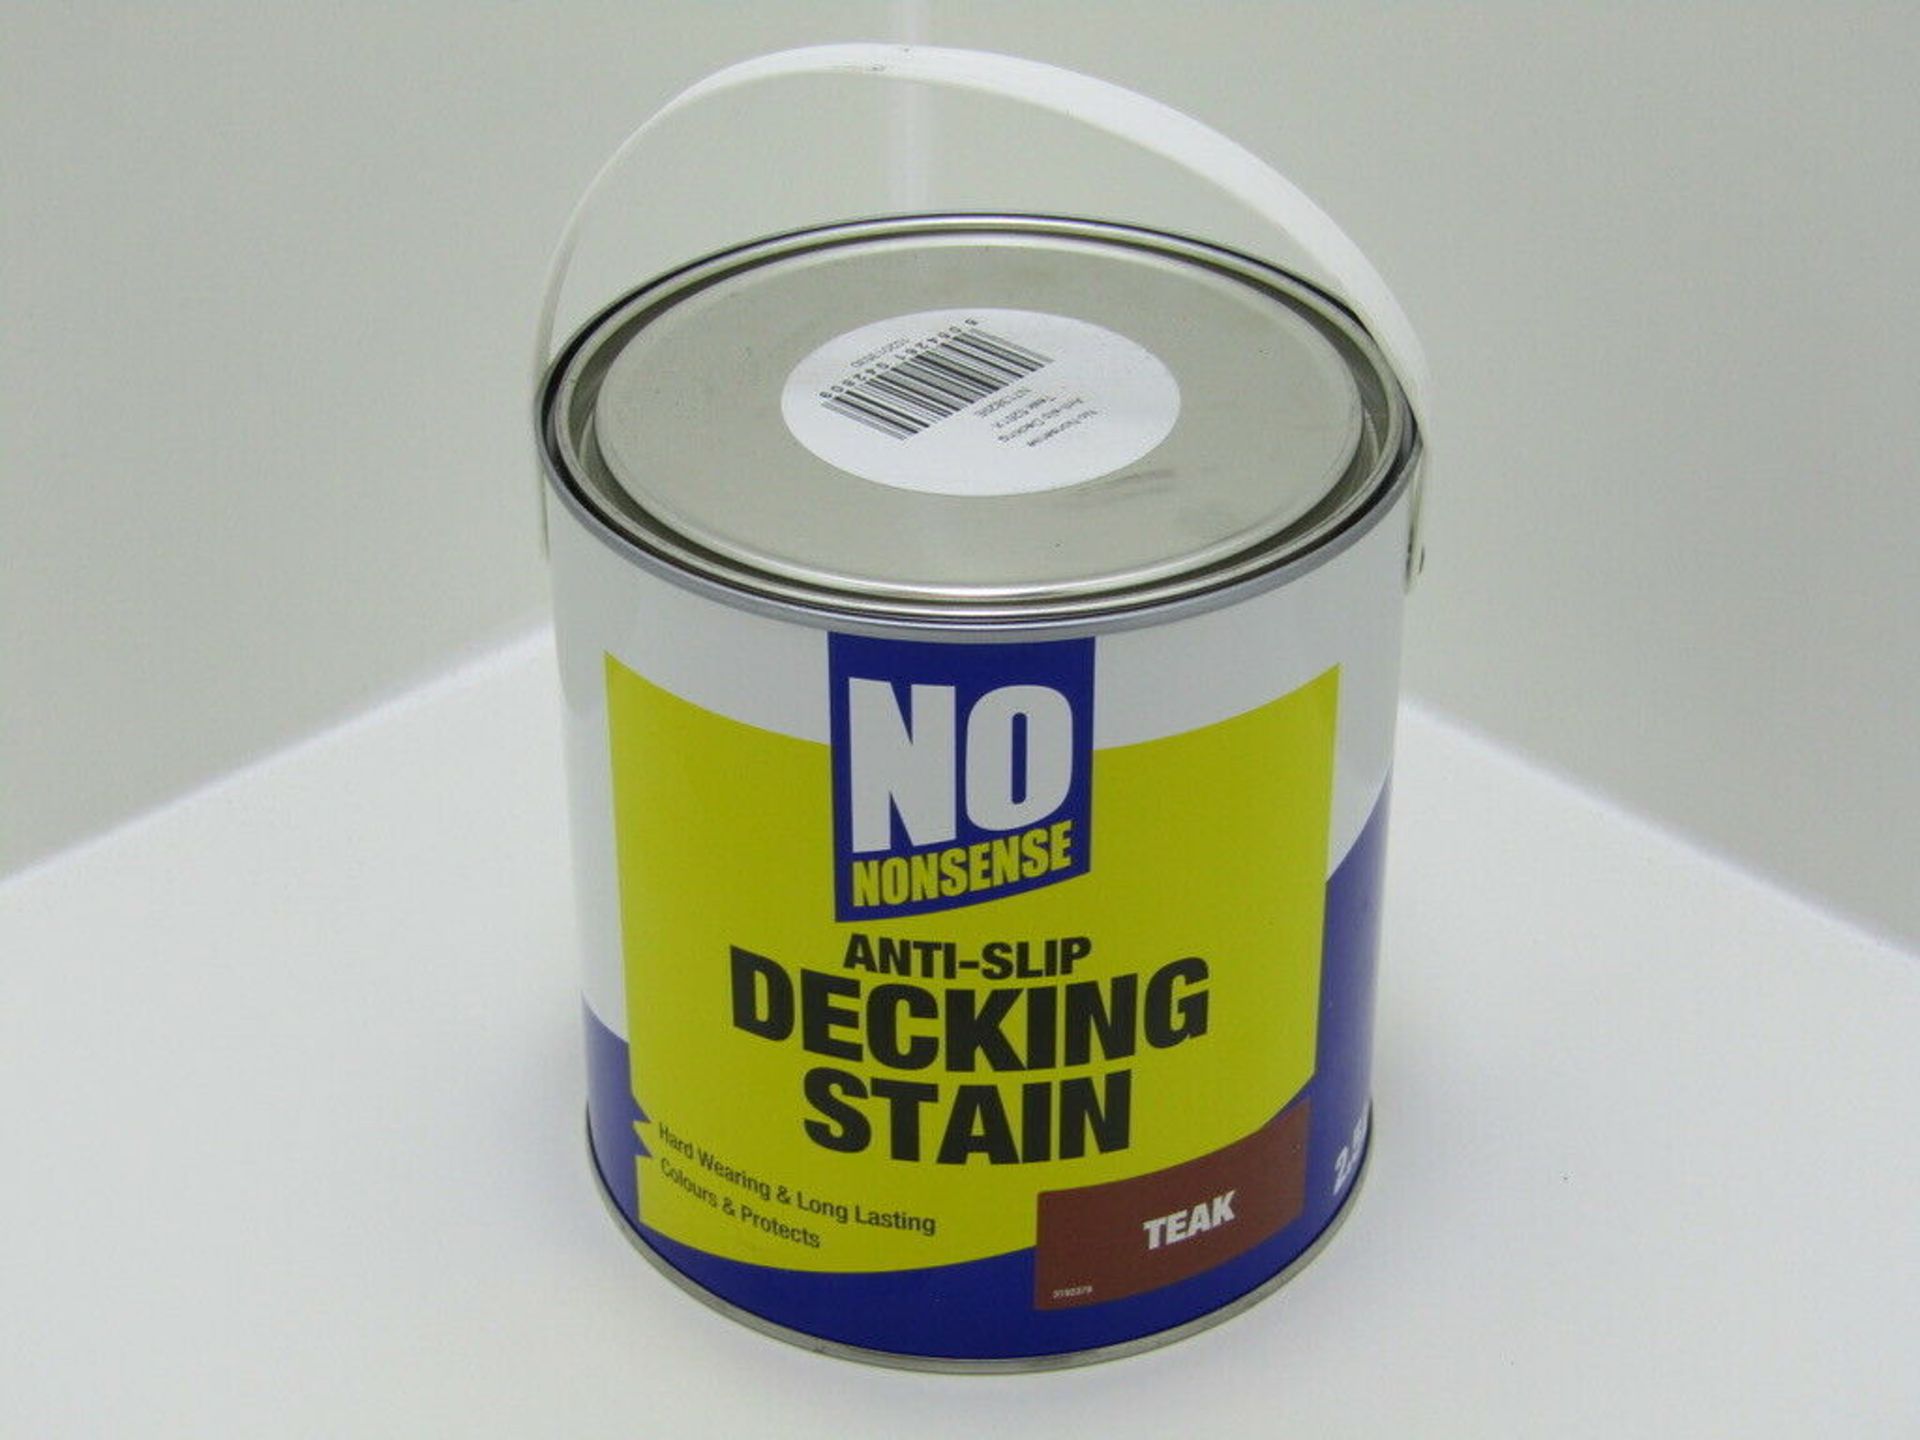 Anti Slip Decking Paint. Teak. 2.5 litre - Image 3 of 4